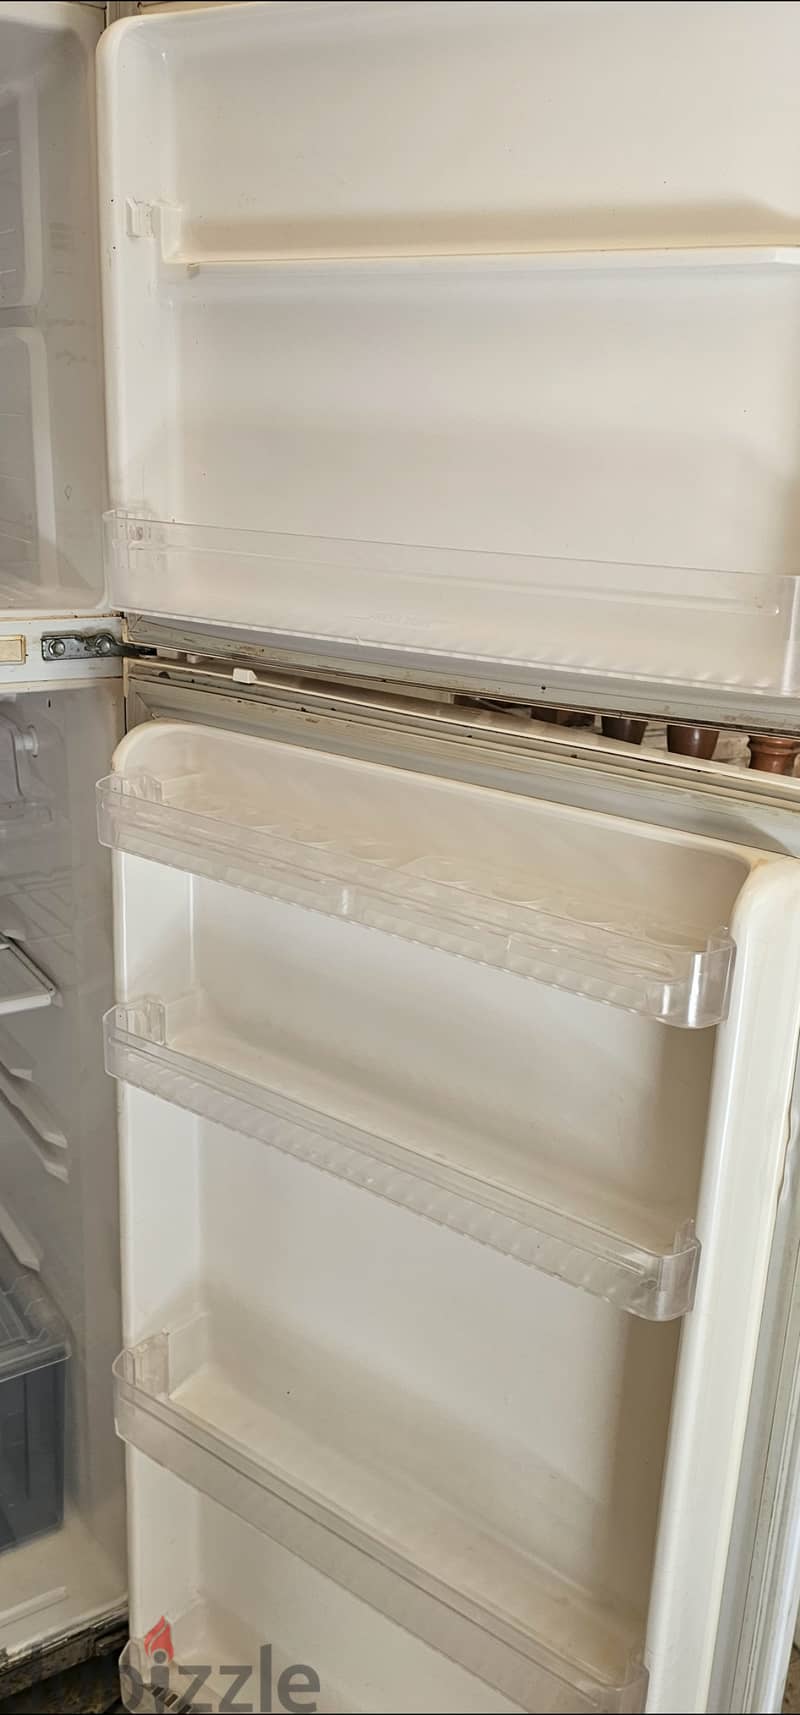 Refrigerator for sale 4